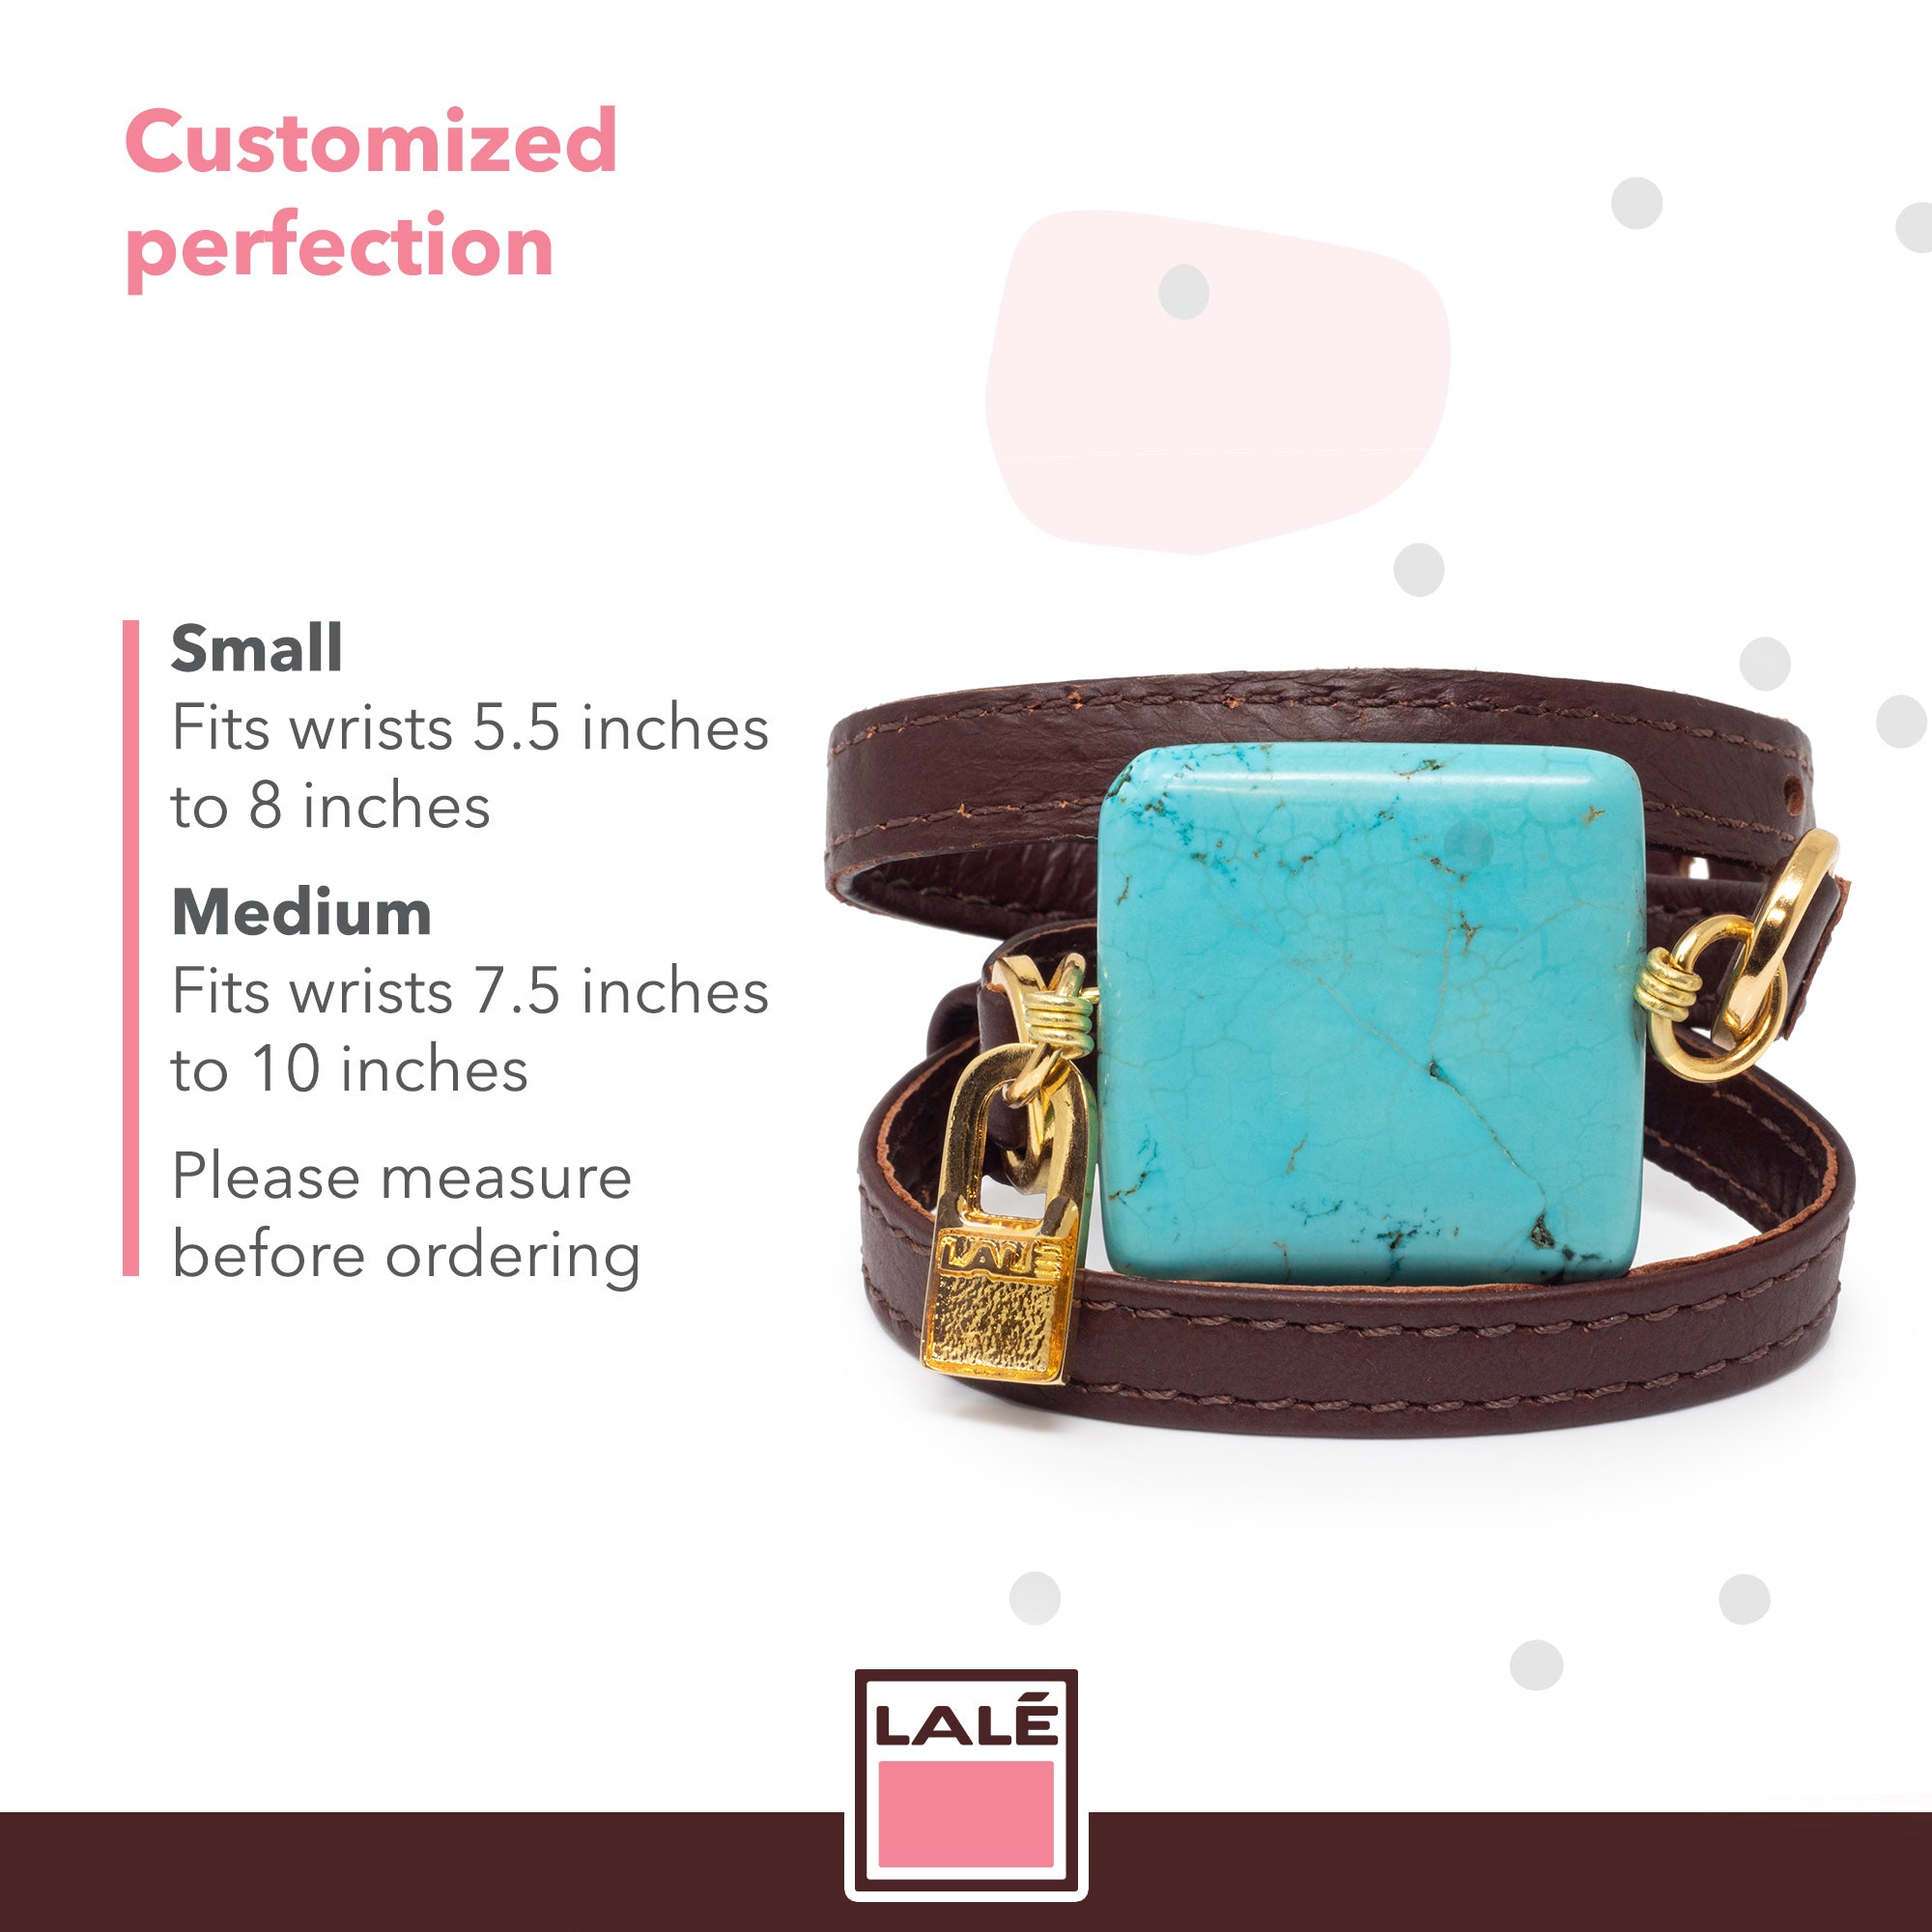 Bracelet Ale - Brown Leather - LALE - LEATHER - BRACELETS